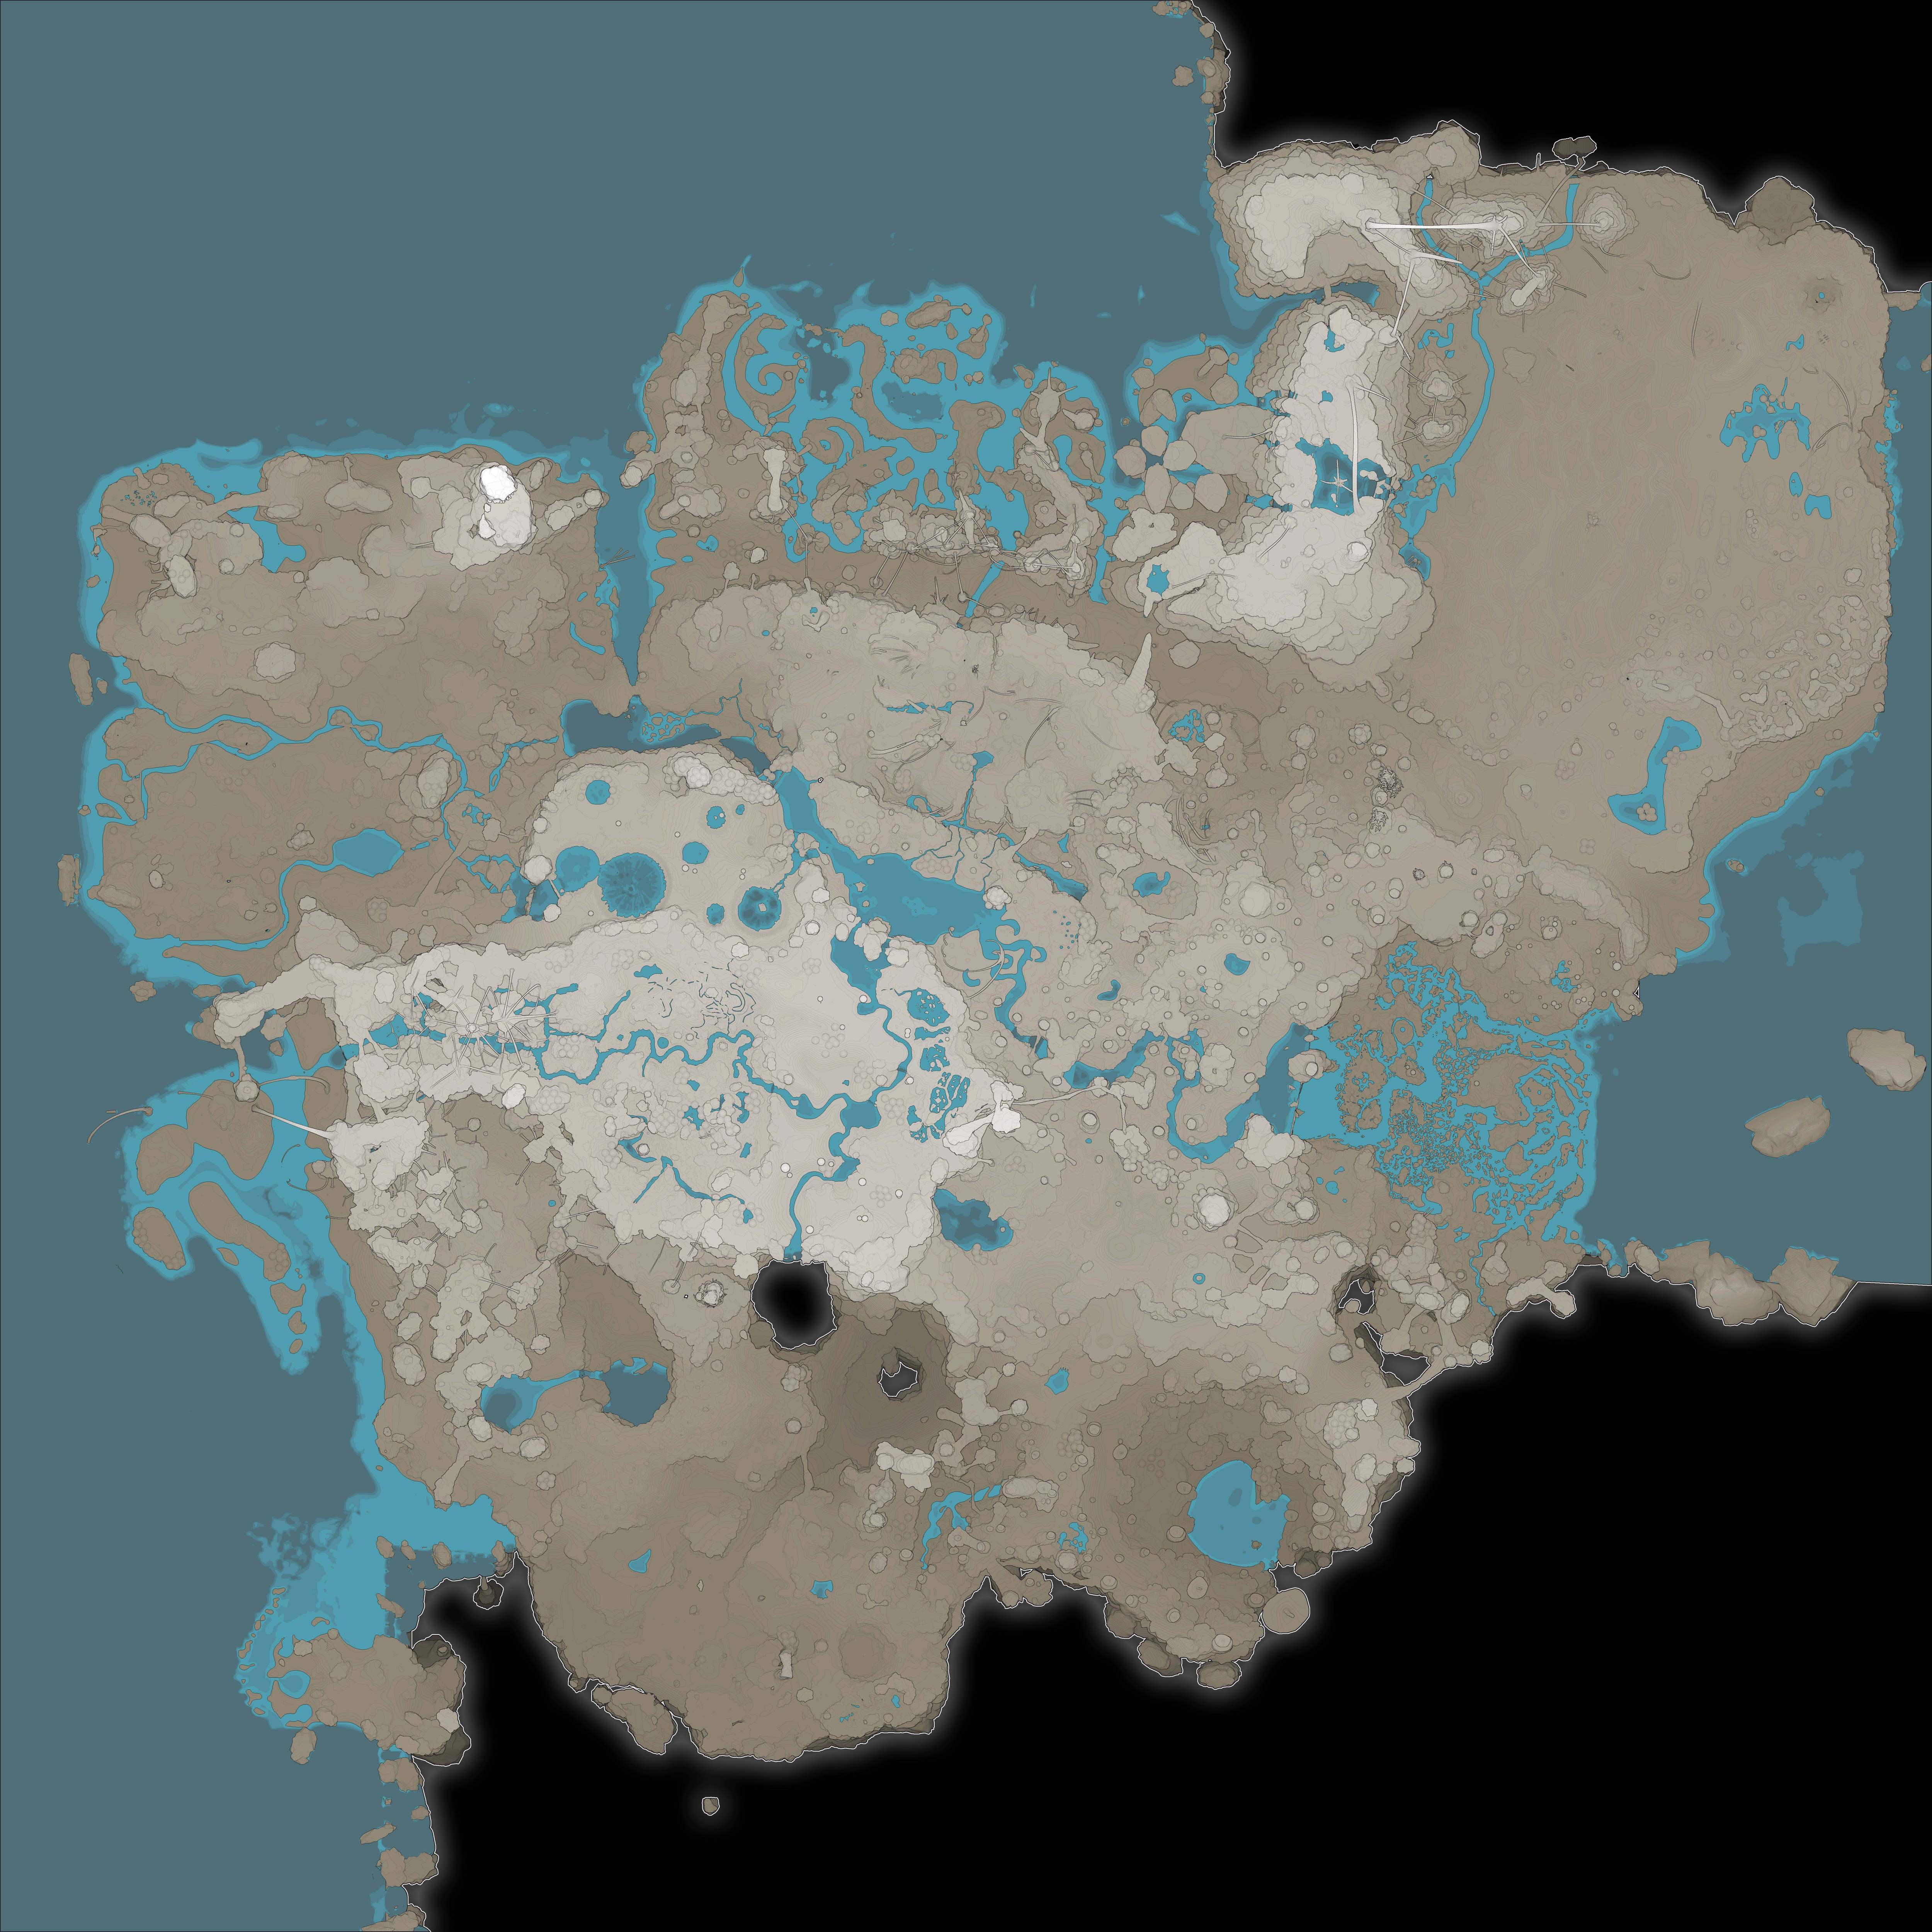 fuel game map comparison